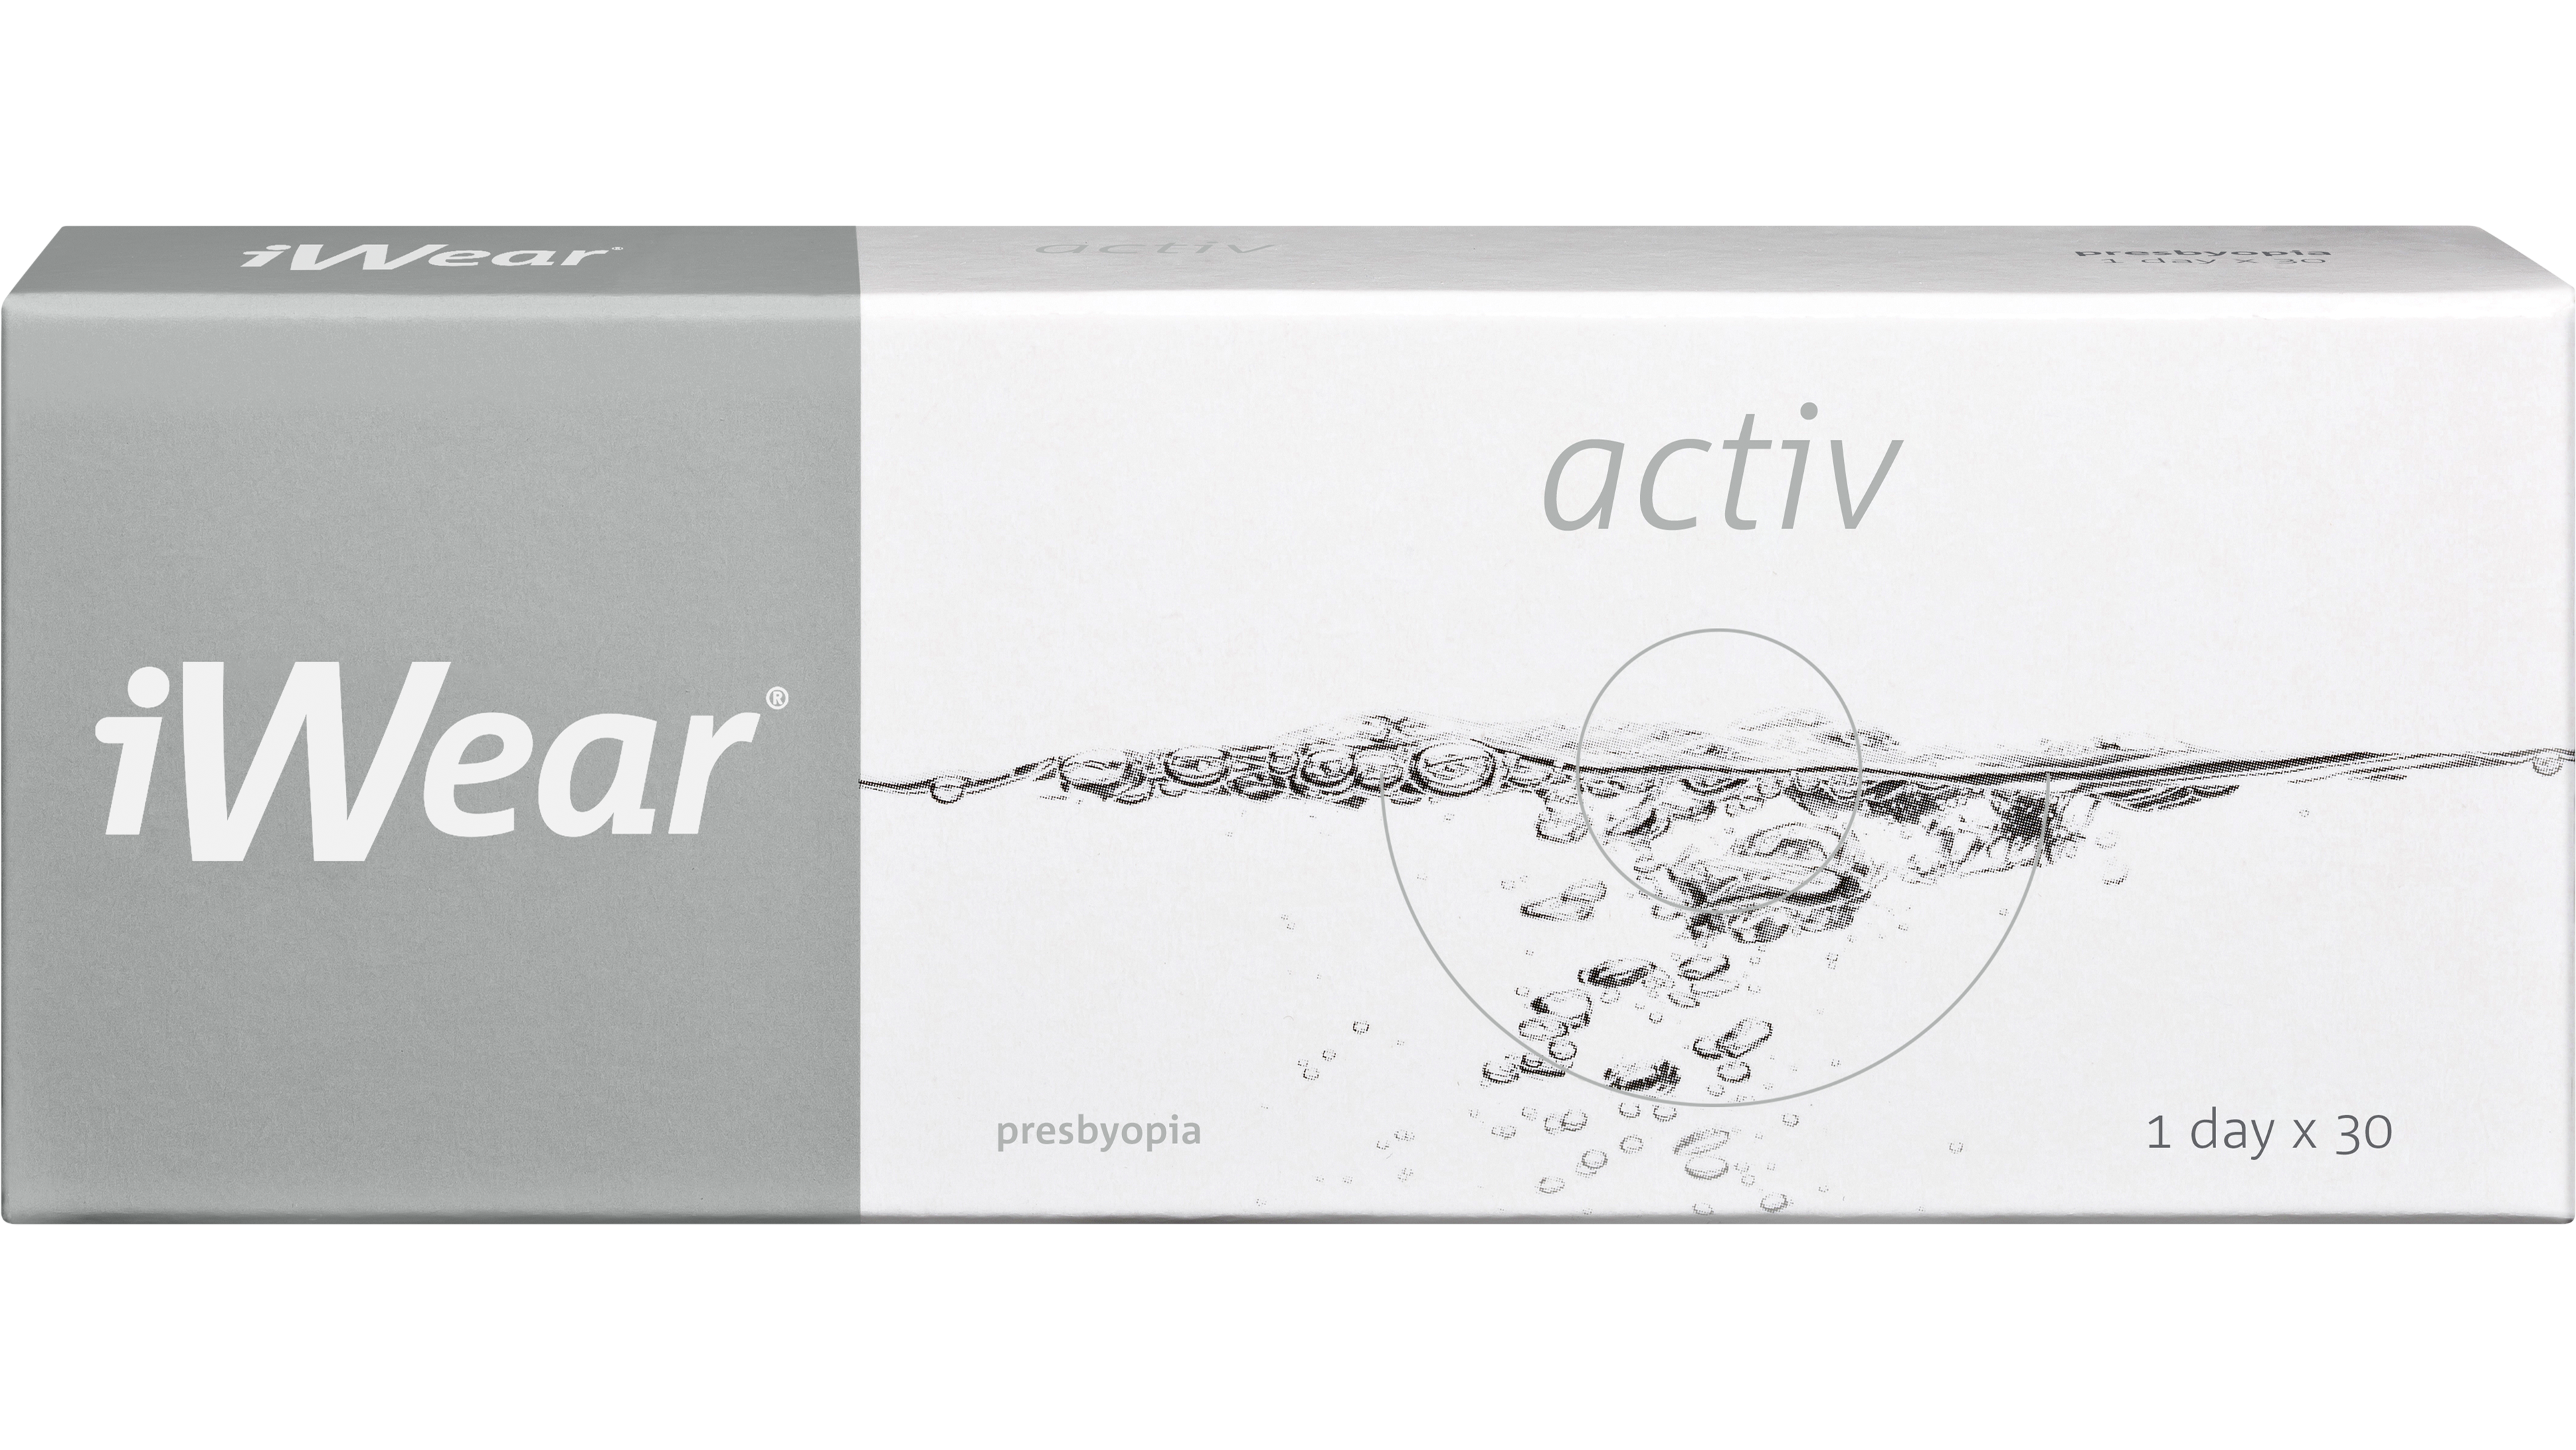 Front iWear iWear activ presbyopia 30 unidades Diarias 30 lentillas por caja